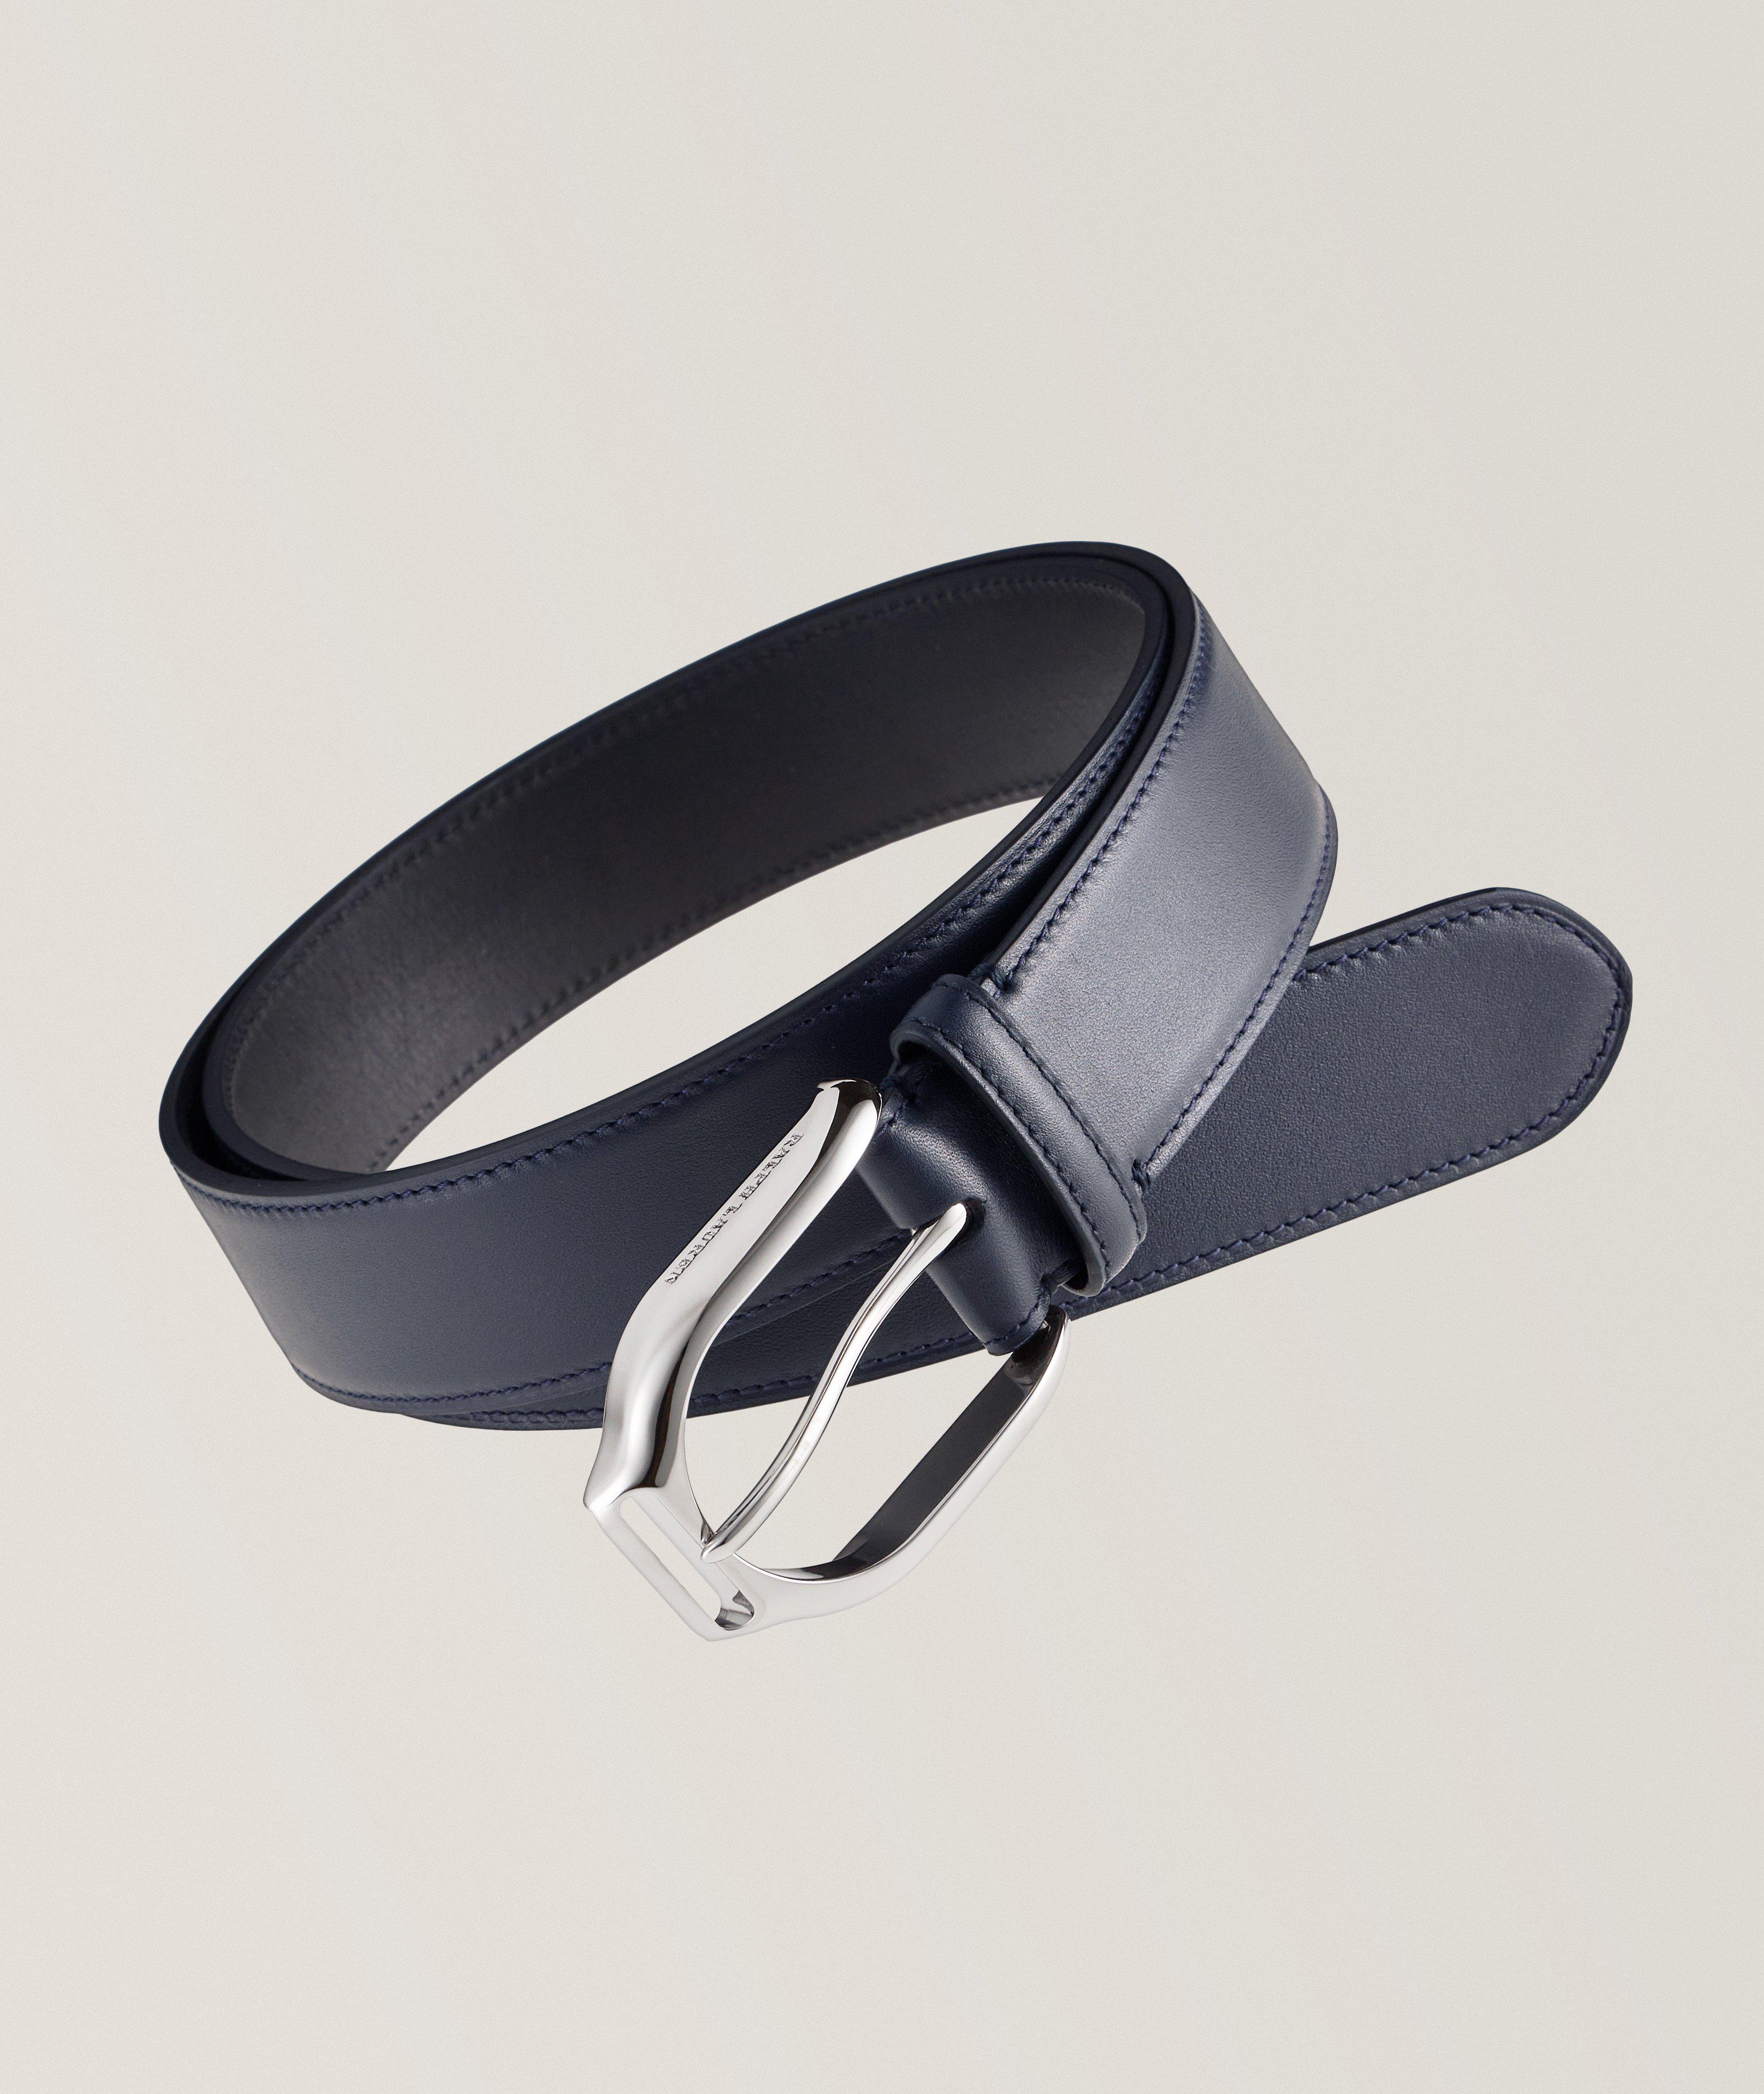 Wellington Collection Leather Belt image 0